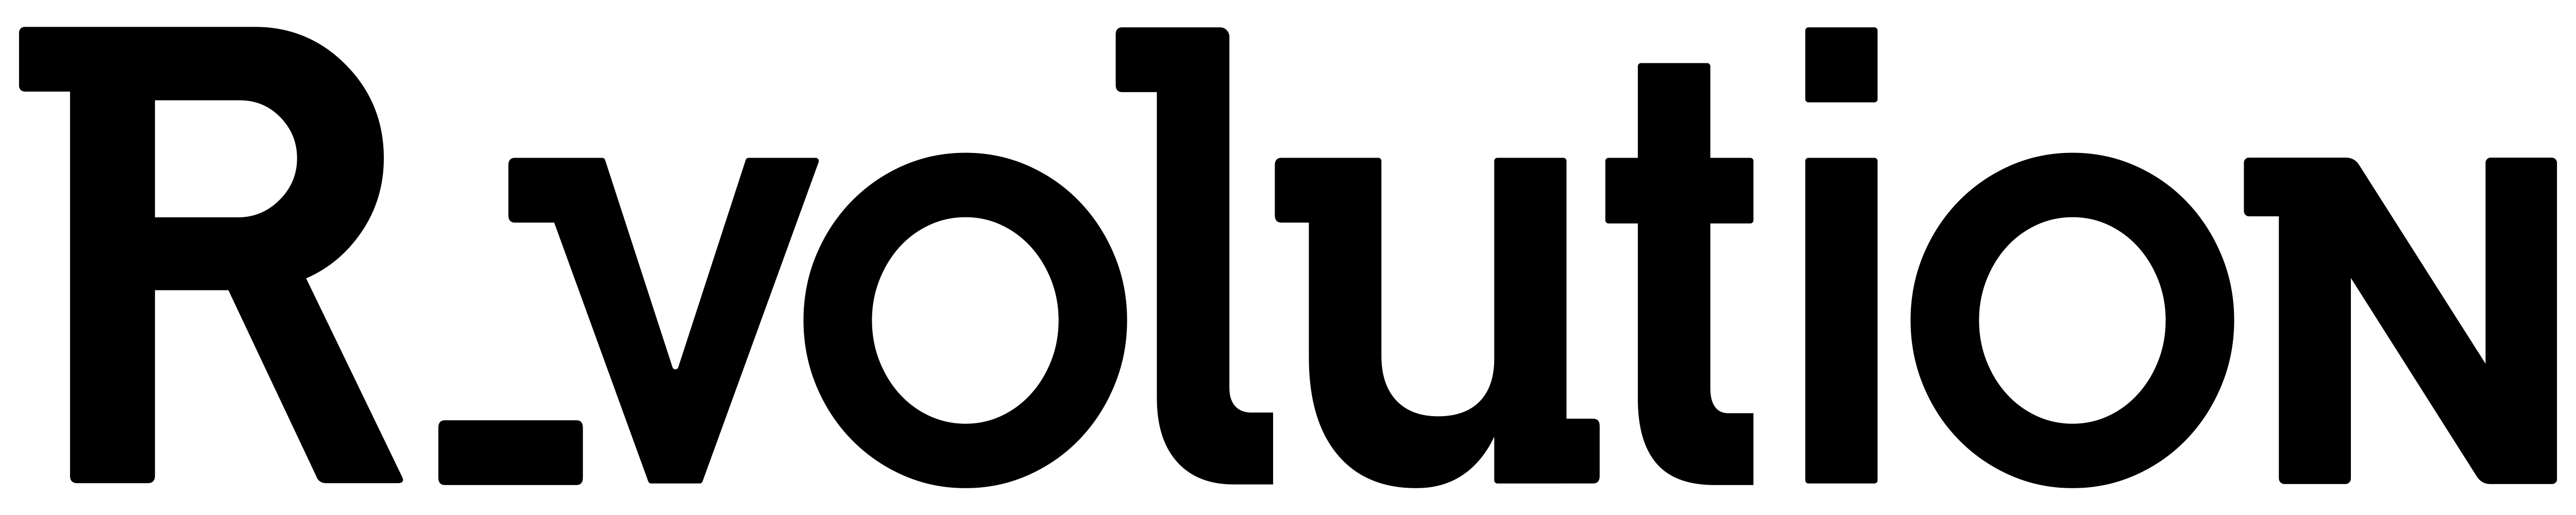 R_volution-Logo-Black-Transparent-5000x1000.png